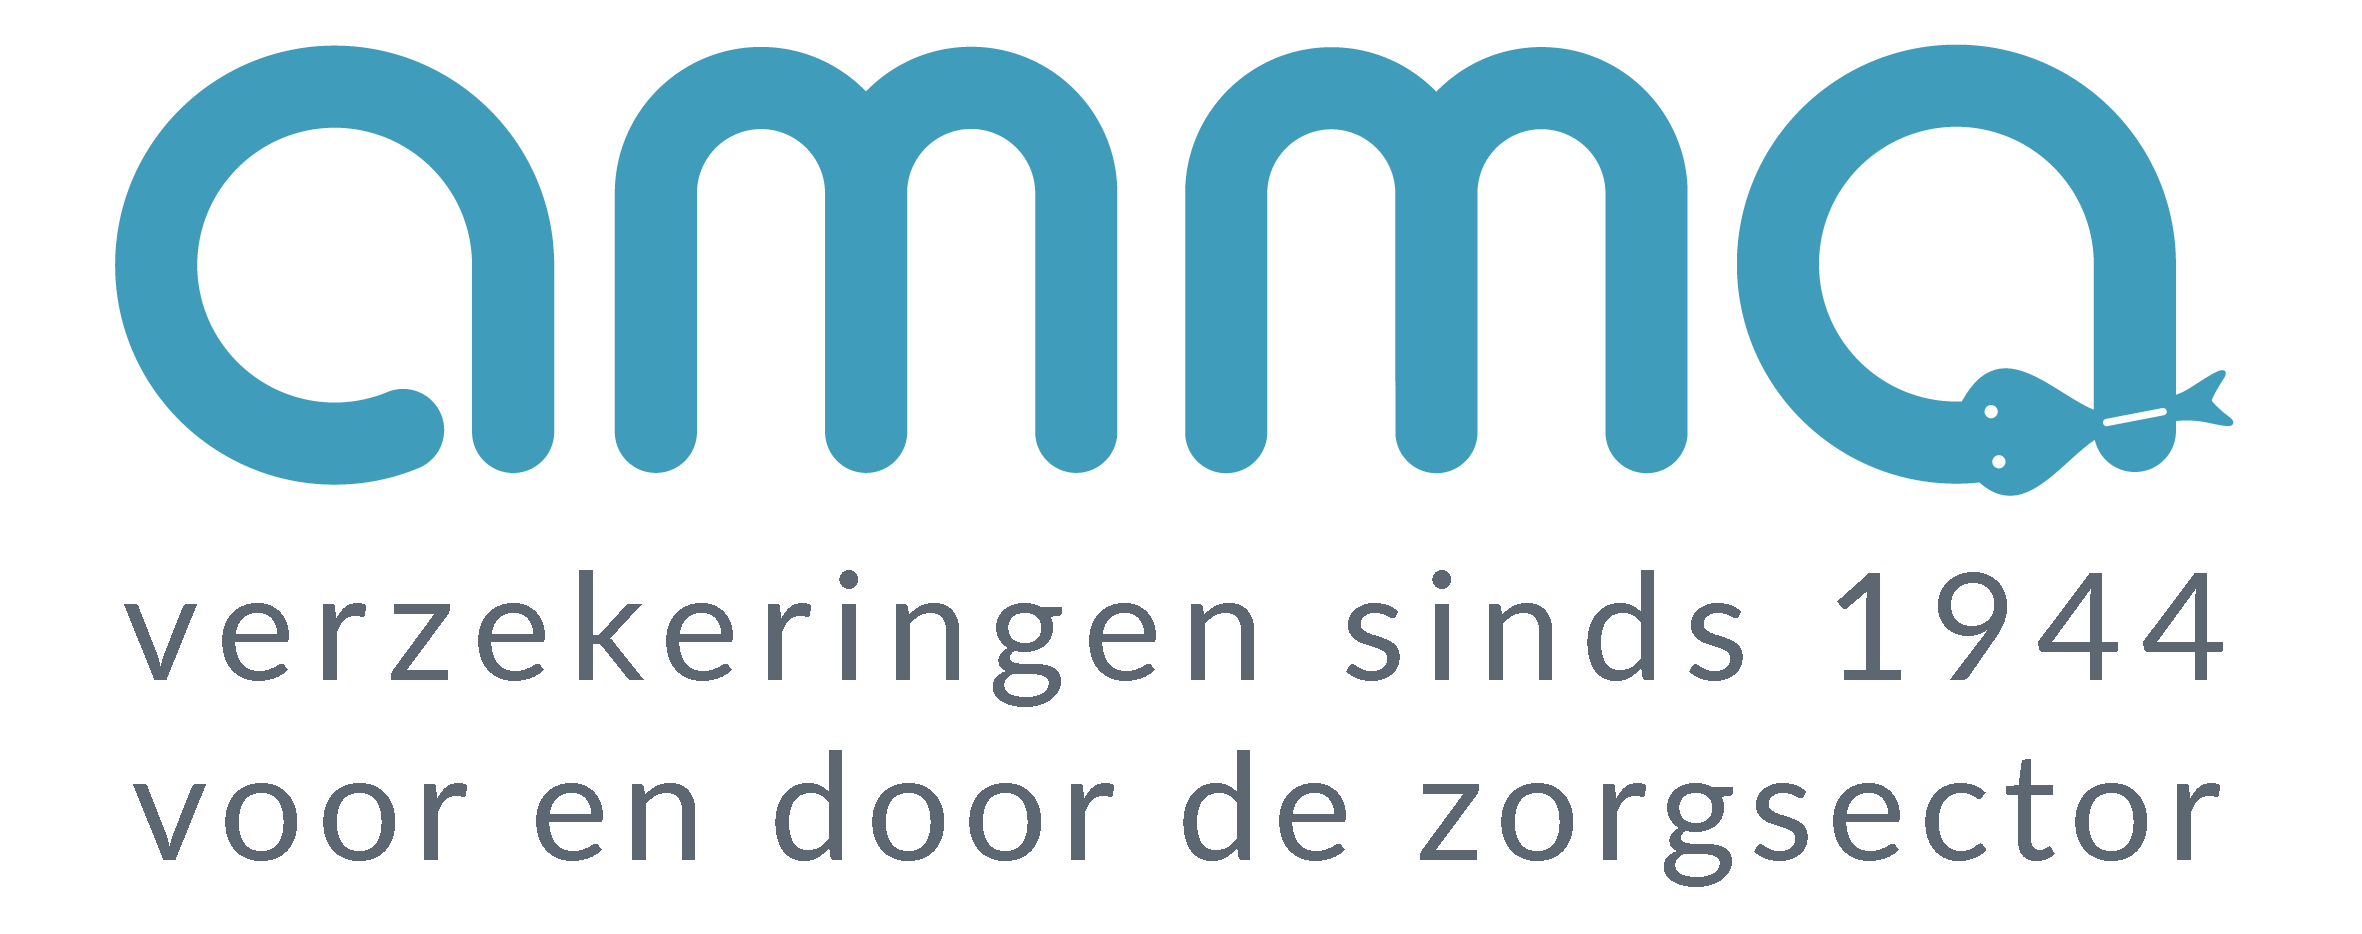 2022-logo-lato-NL-HD-300dpi